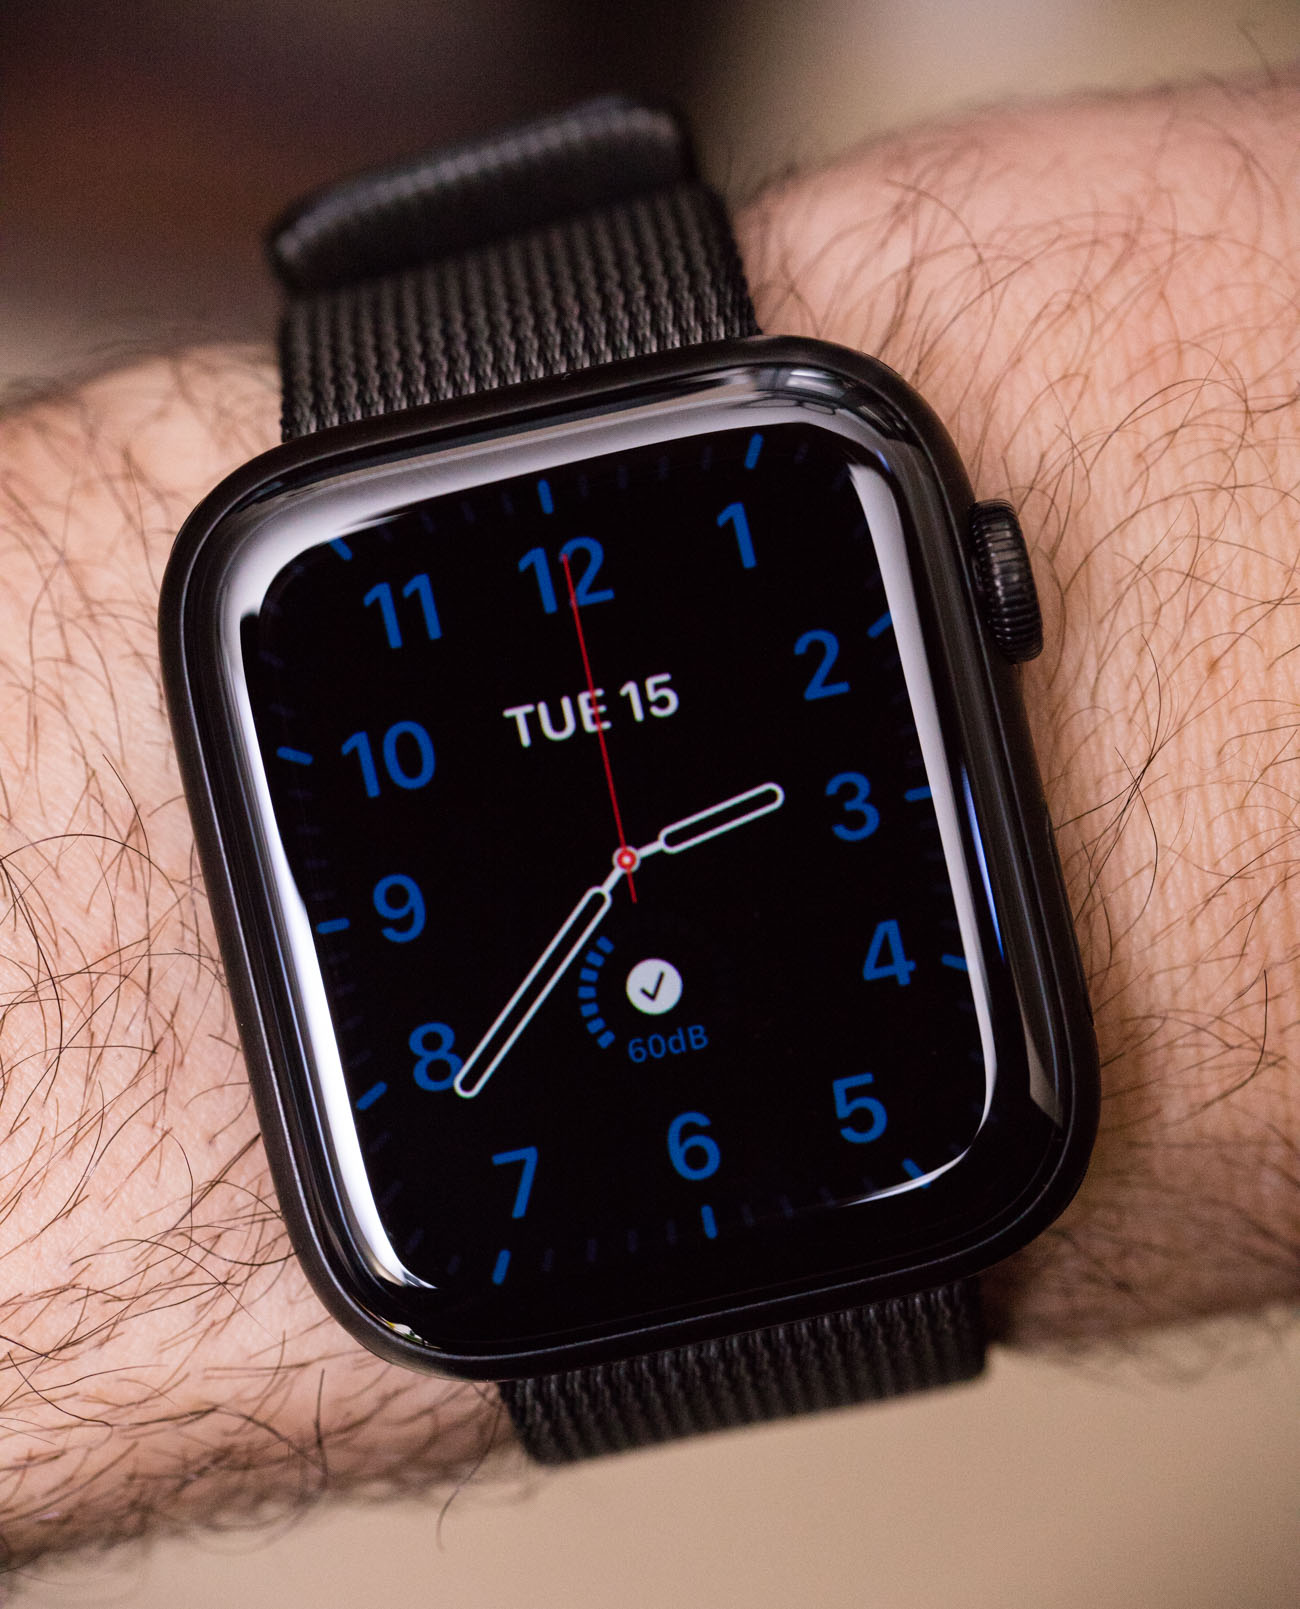 Iphone watch 5. Apple watch Series 5. Часы эпл вотч 5. Циферблат Эппл вотч 4. Apple watch 6.